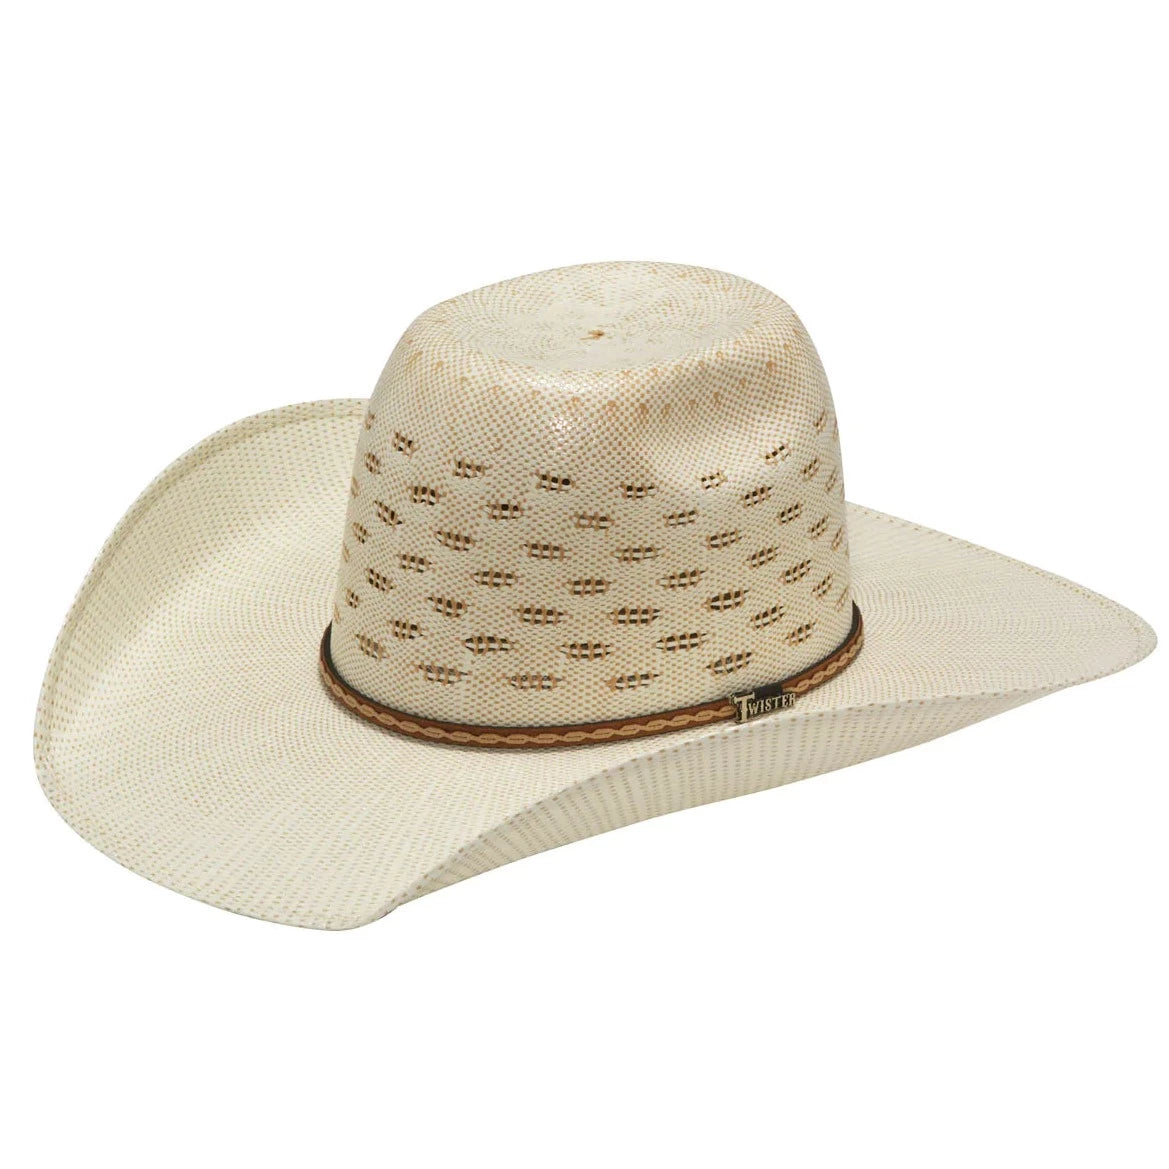 Twister Bangora Punchy Straw Cowboy Hat